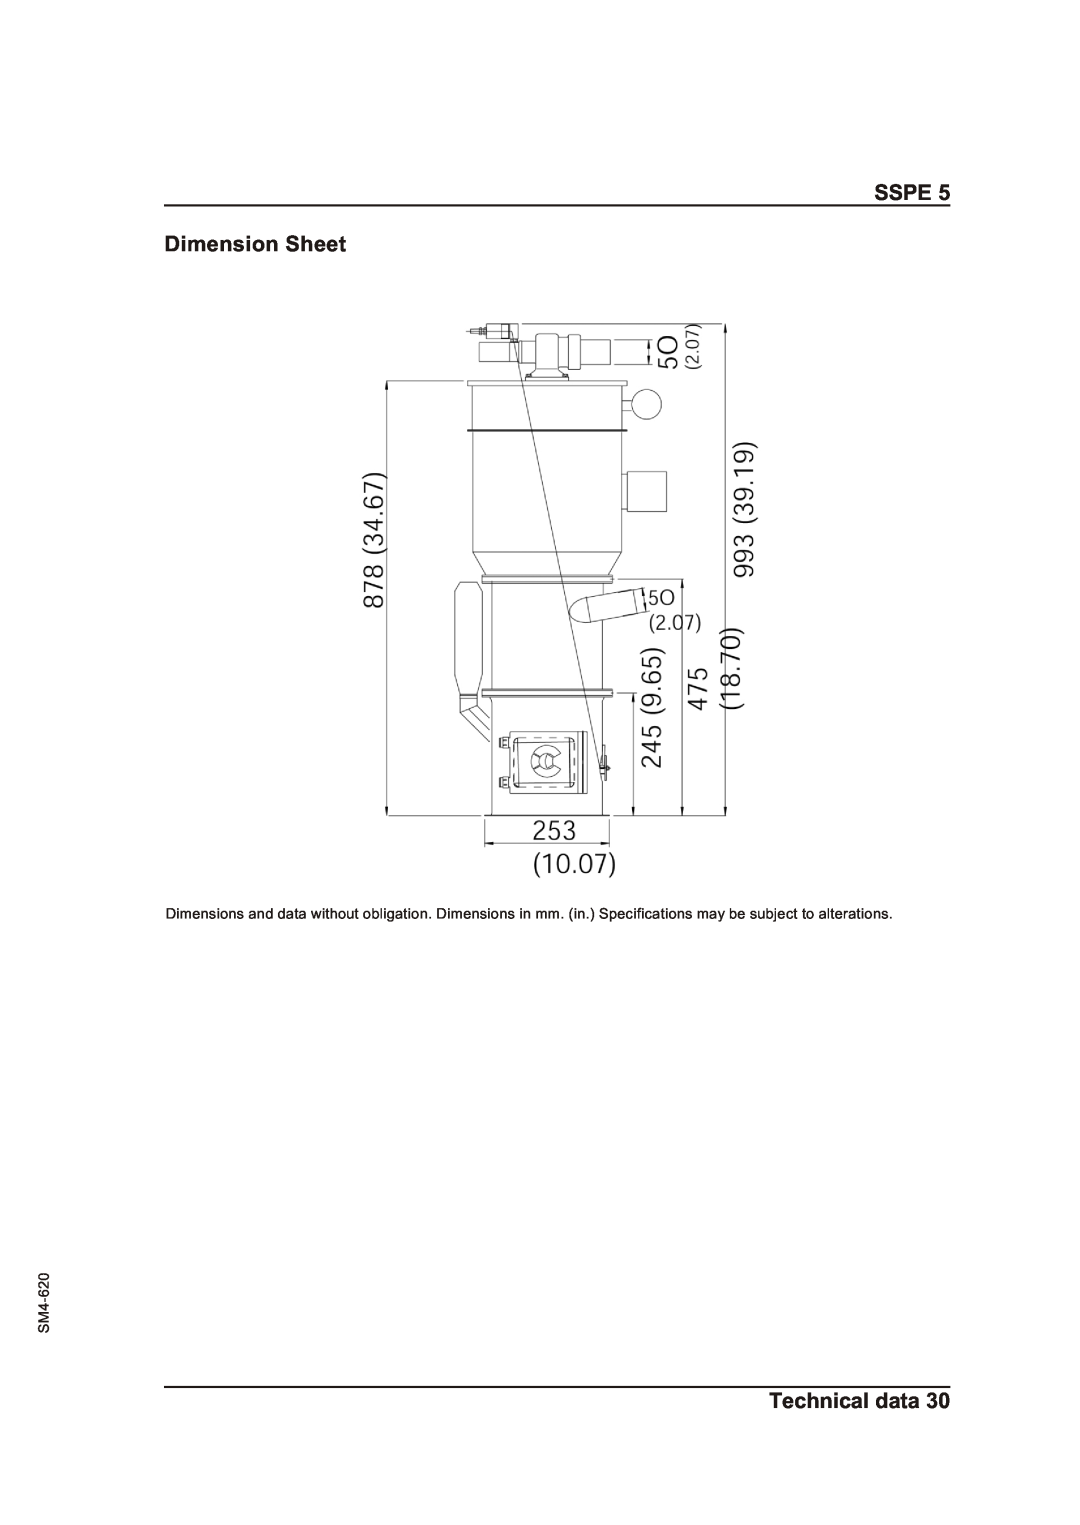 Sterling SSPE 5 manual SSPE Dimension Sheet, Technical data, SM4-620 